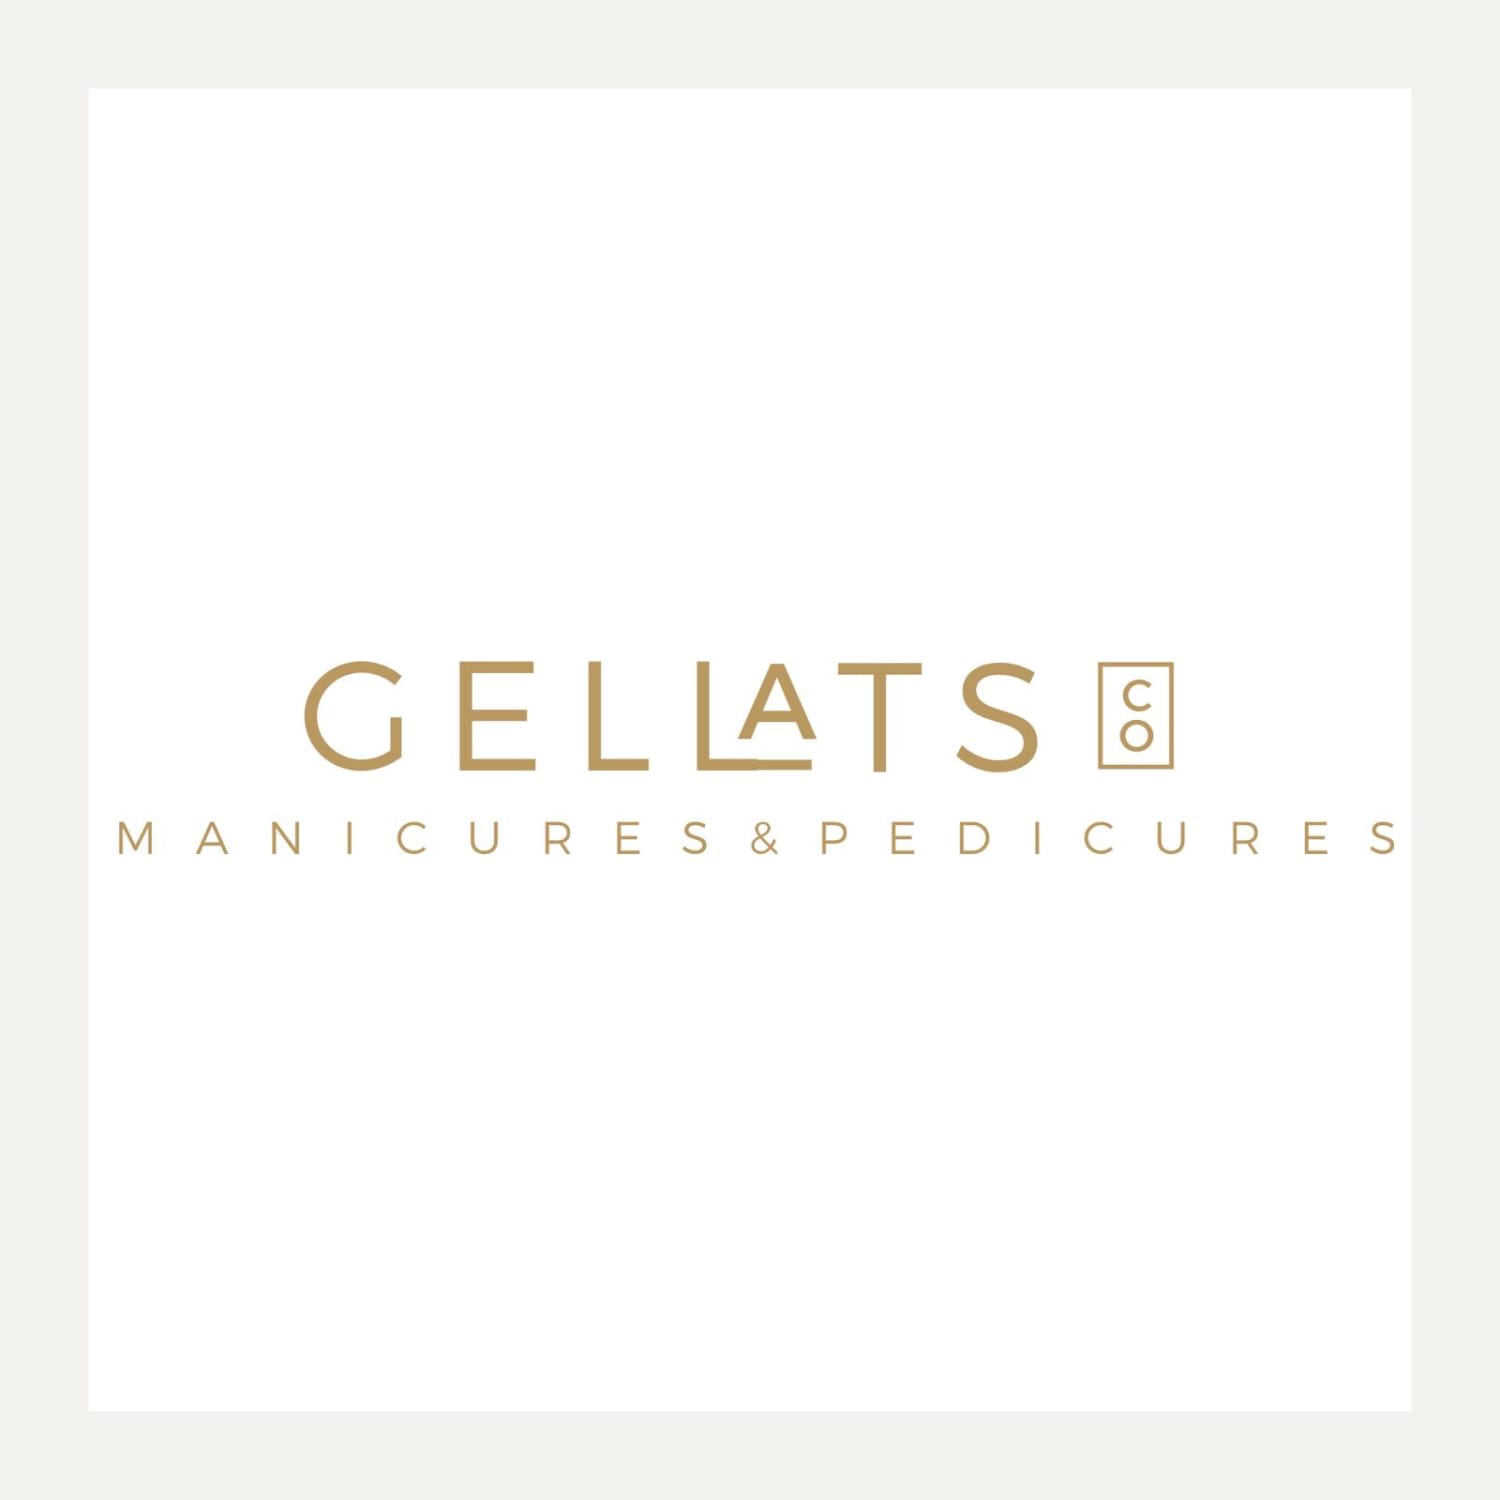 Gellats